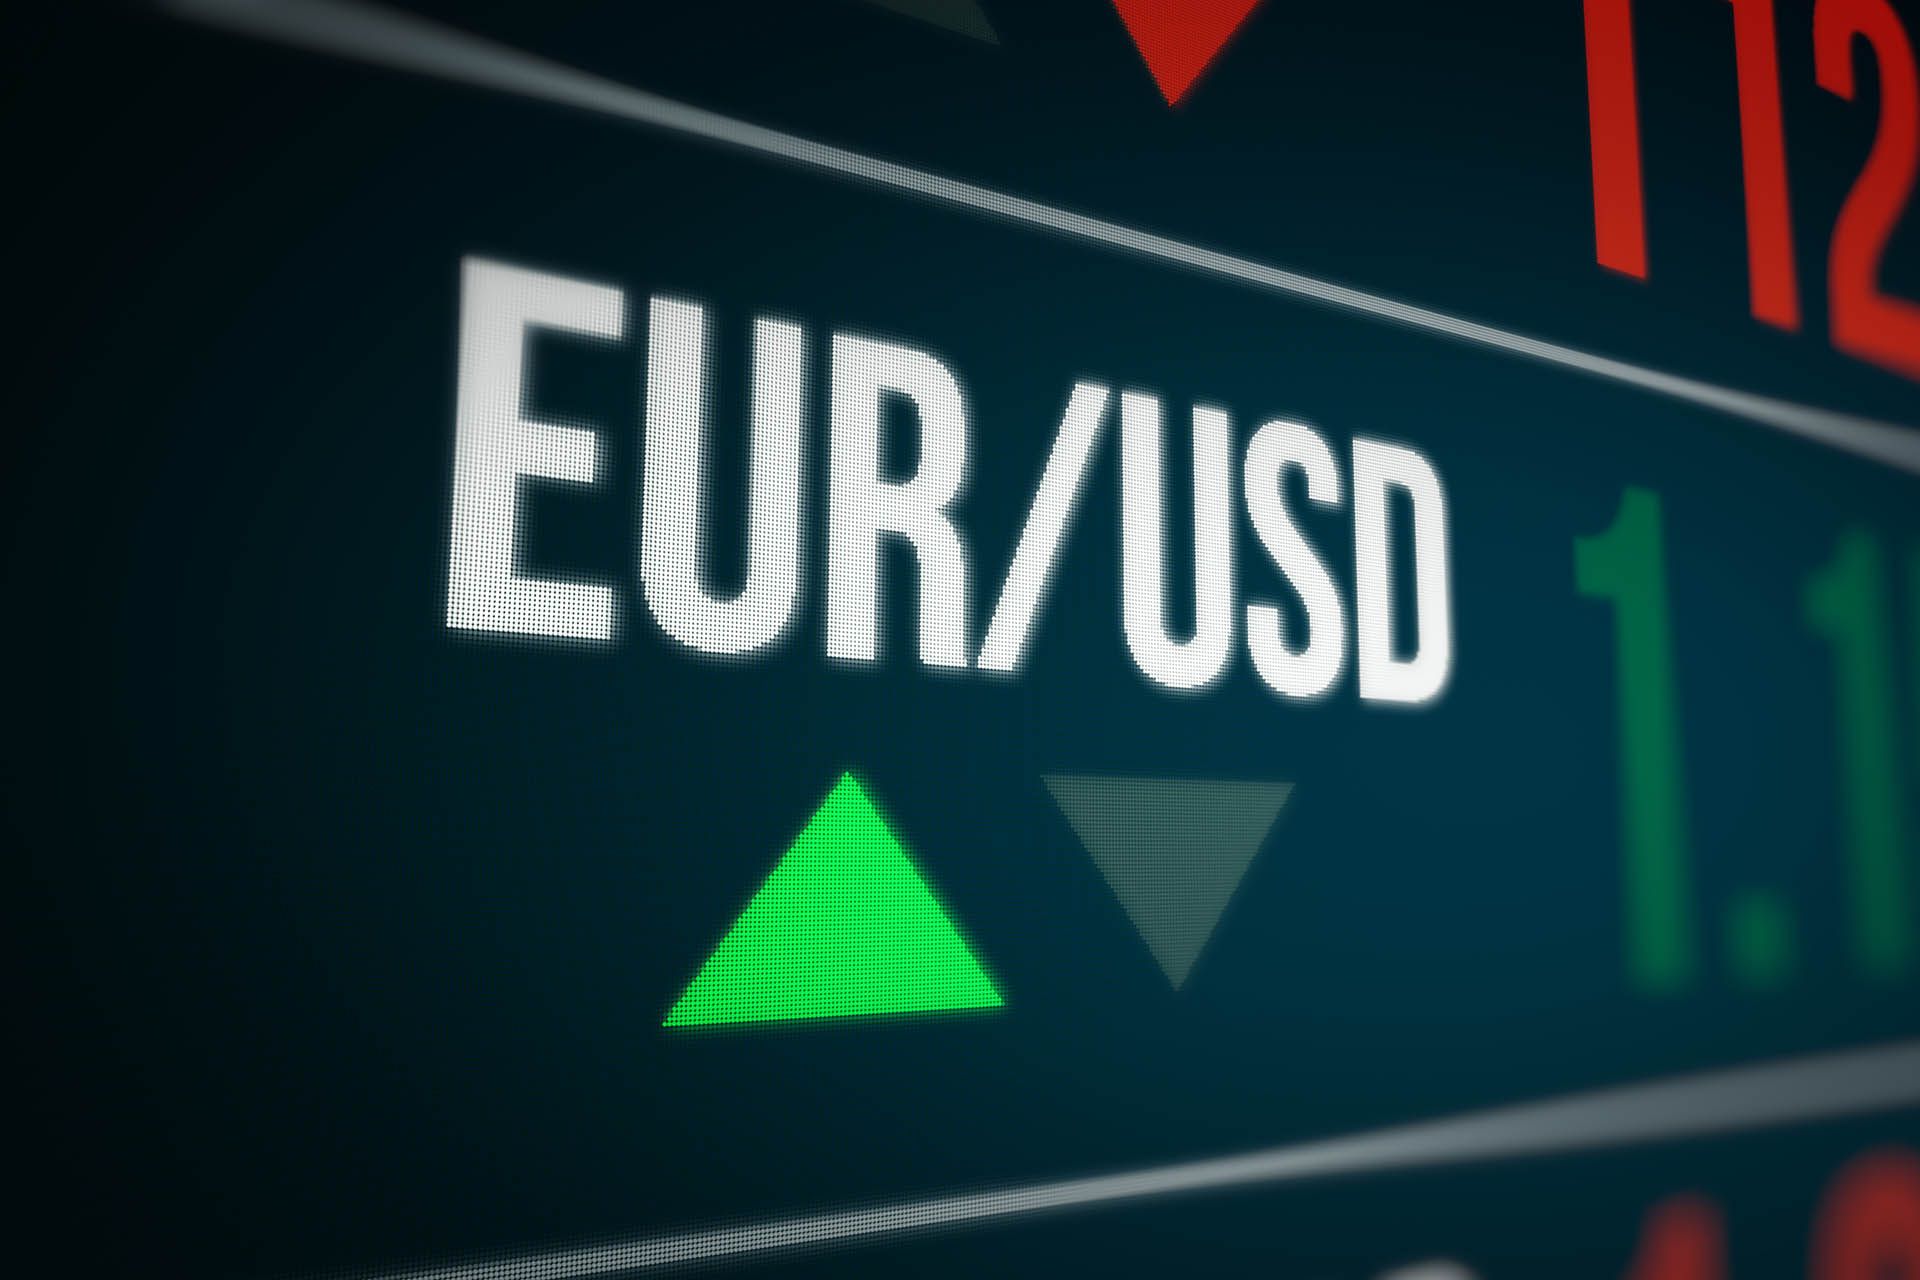 eur/usd chart